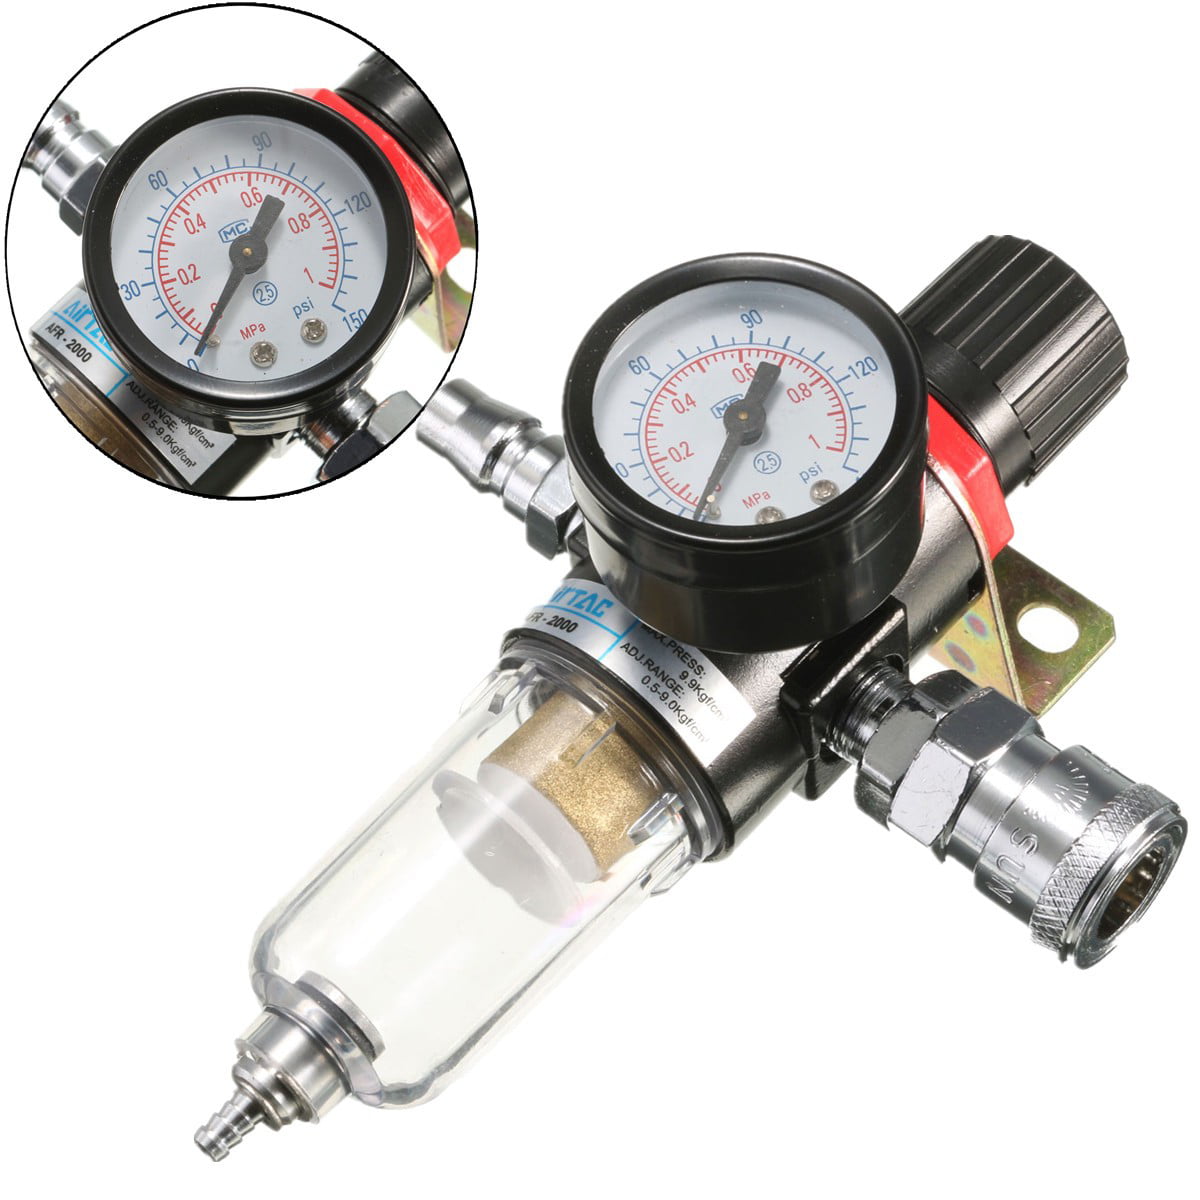 Air Pressure Regulator Oil/Water Separator Trap Filter Airbrush Compressor USA 